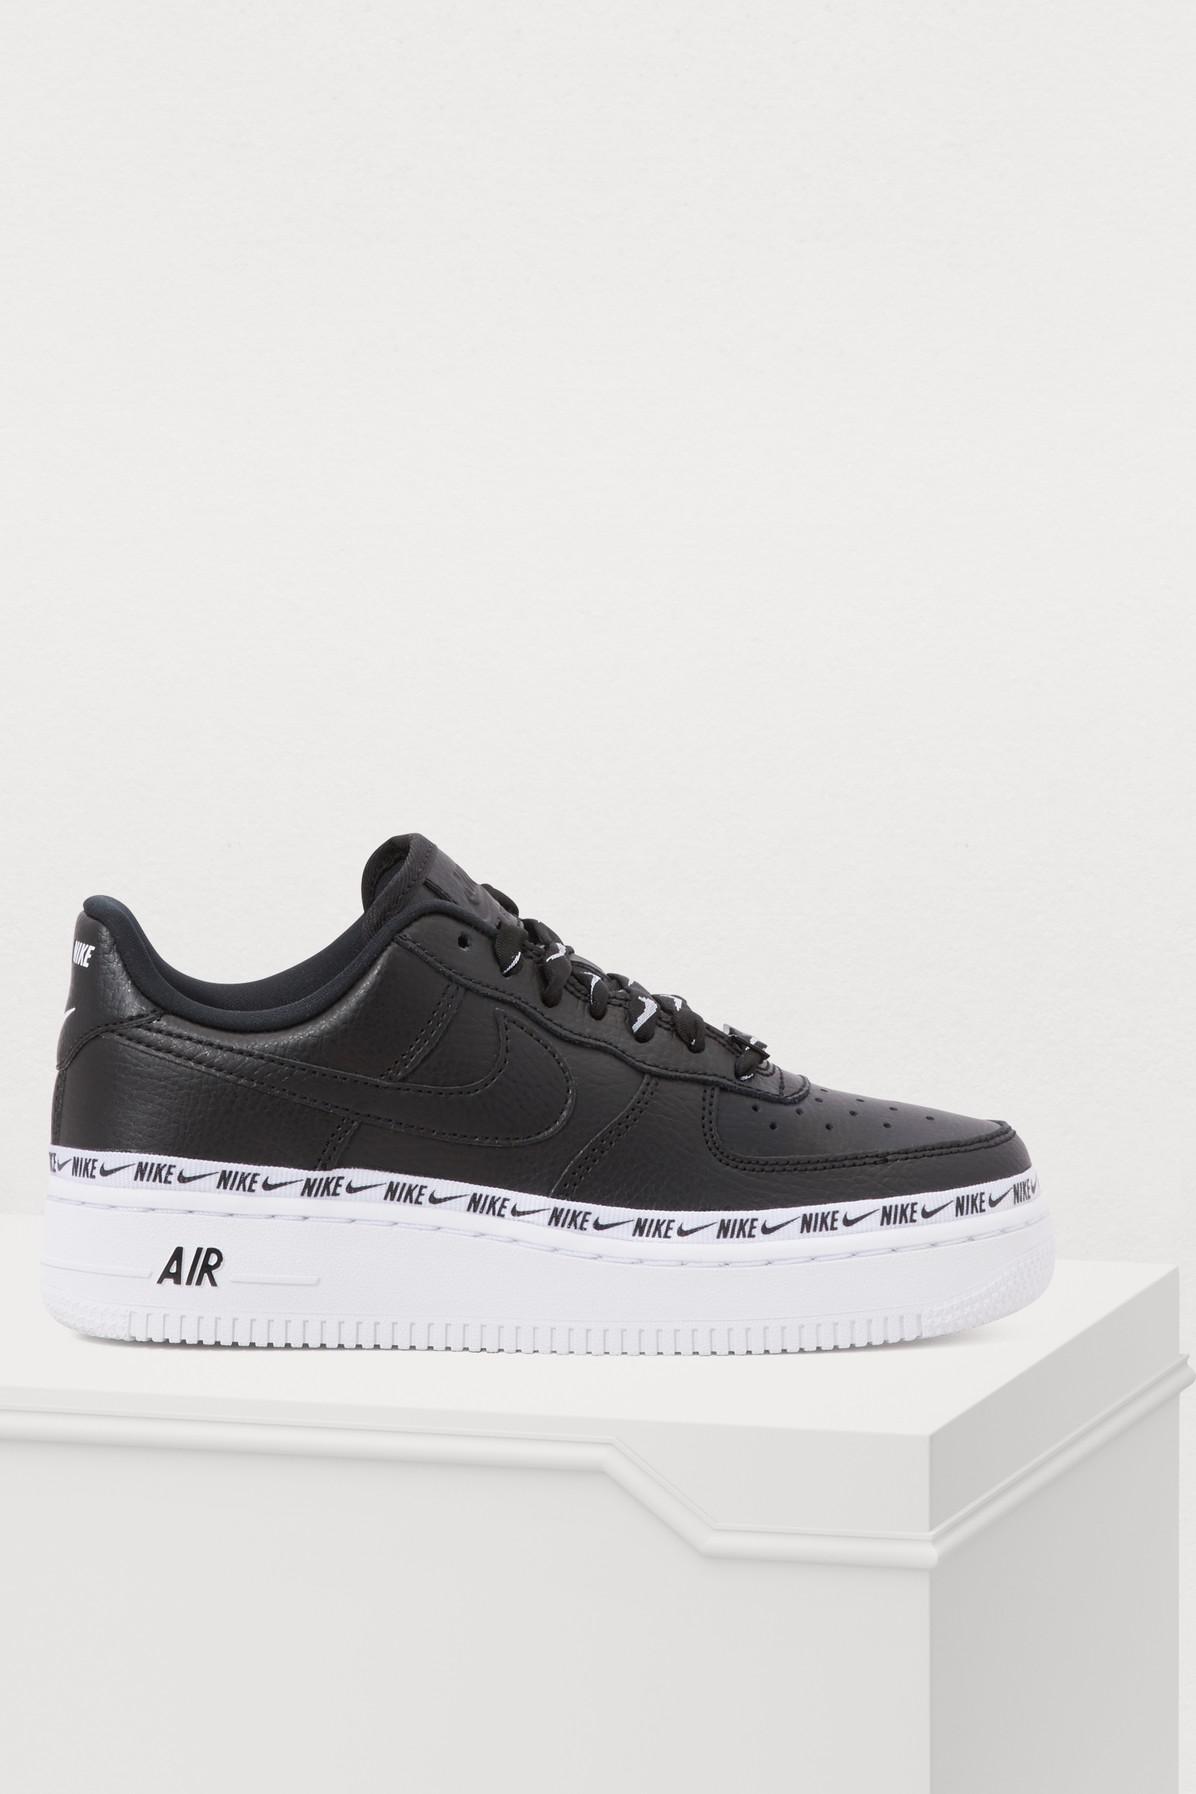 Nike Air Force 1 07 Se Prm Sneakers in Black | Lyst Australia